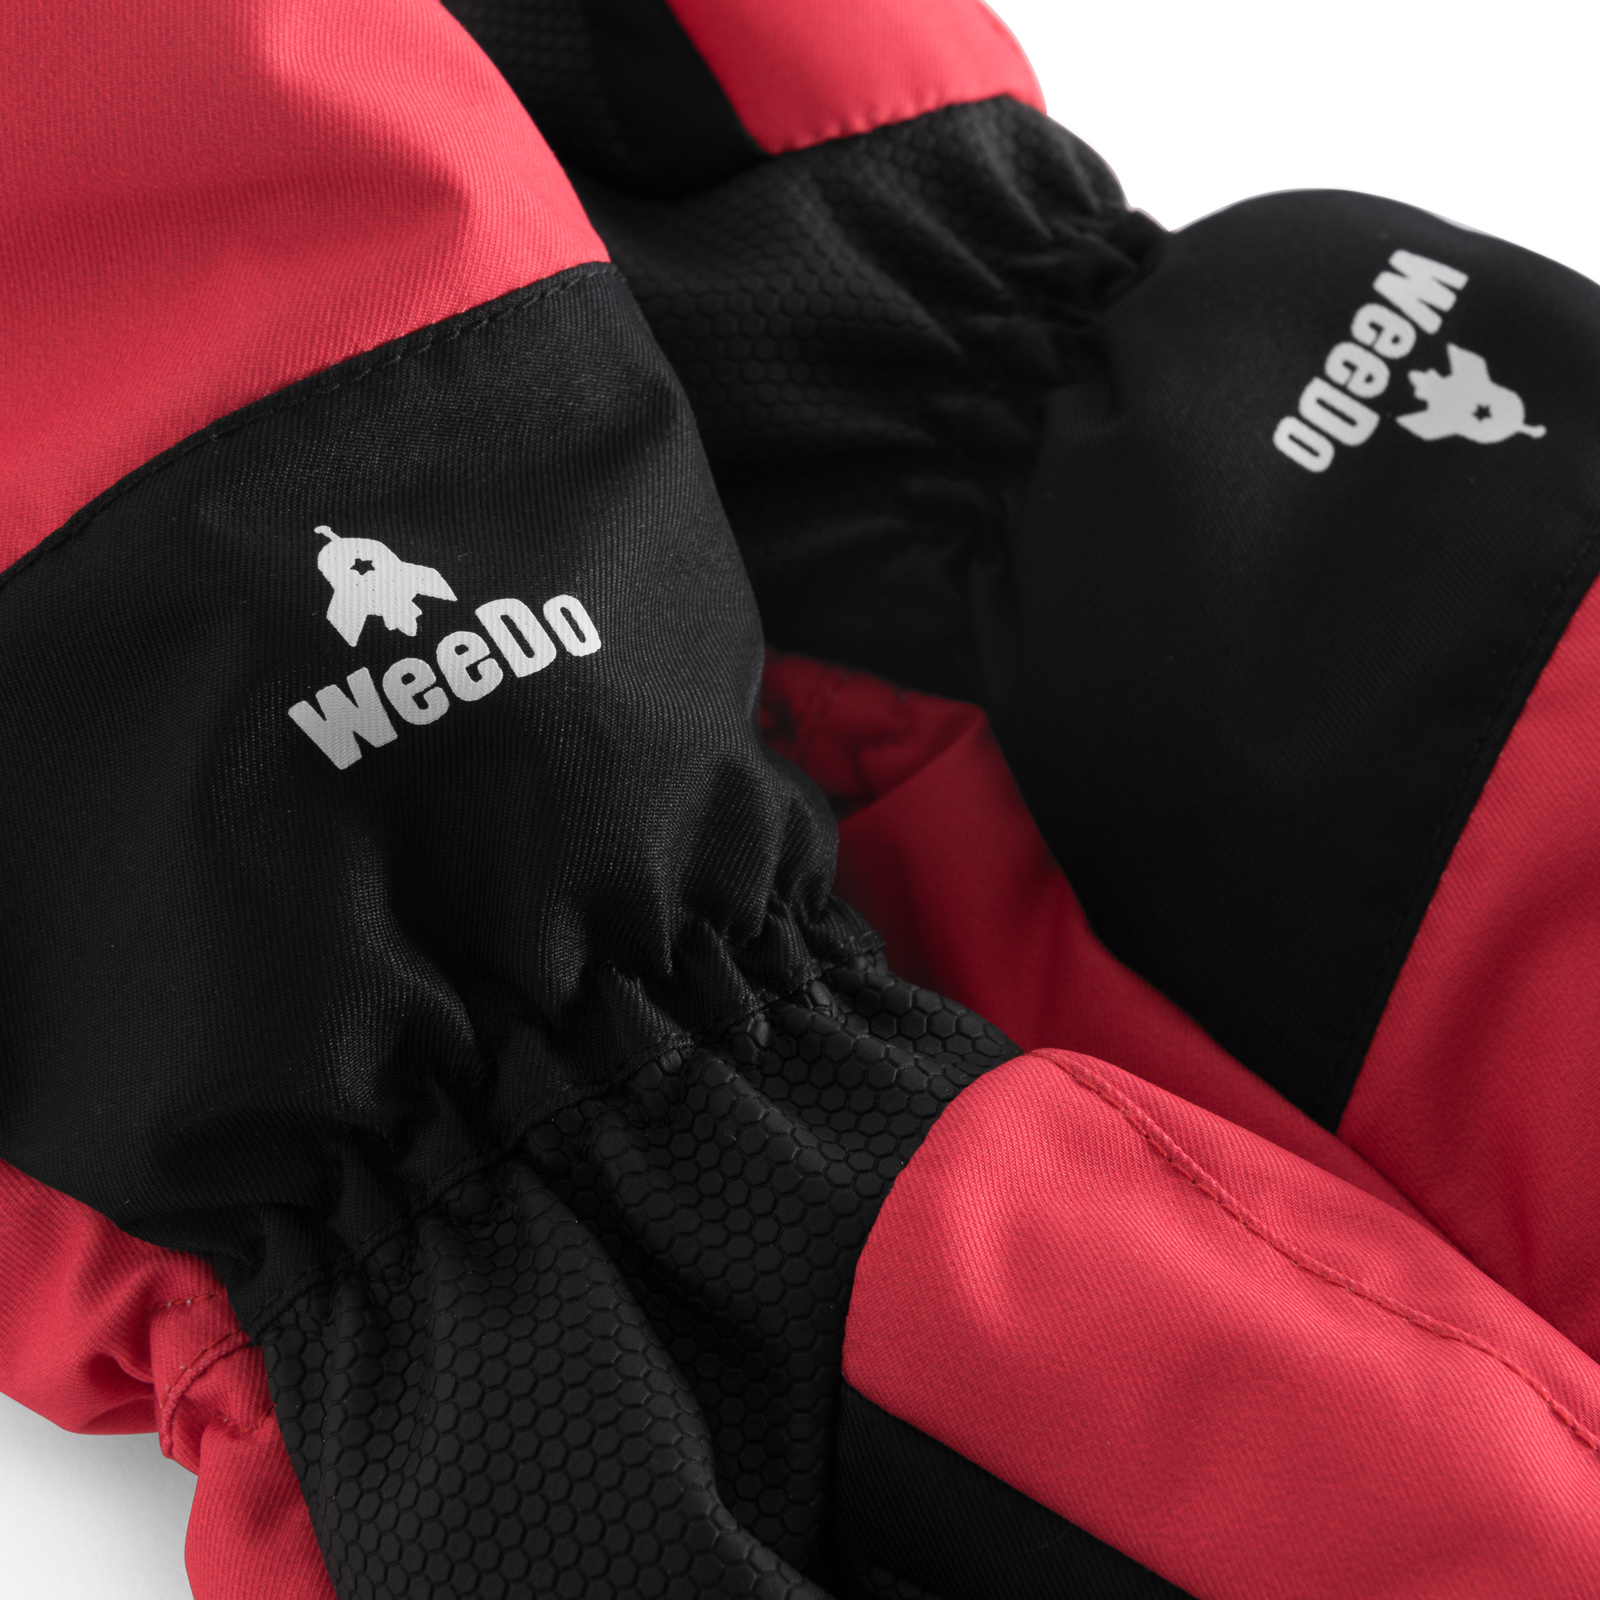 Mănuși Ski & Snow -  weedo DevilDo Gloves